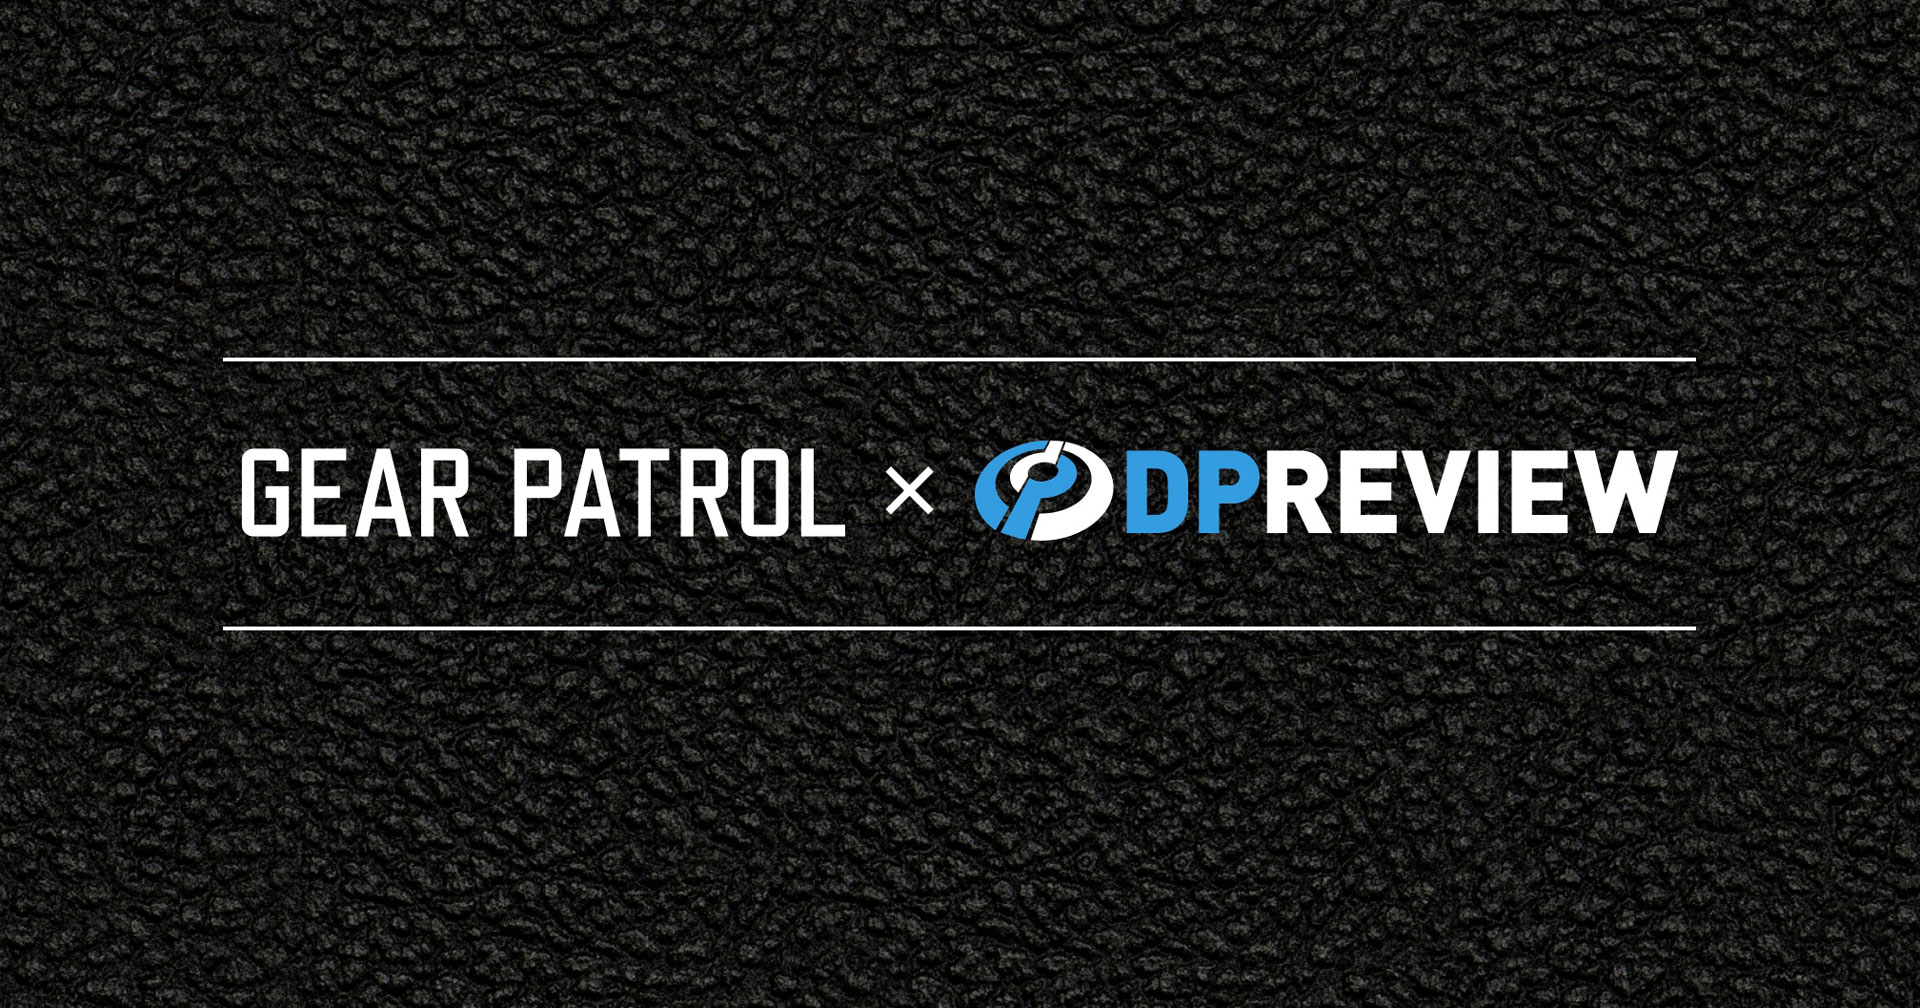 DPReview ได้ไปต่อ! Gear Patrol เข้าซื้อกิจการเป็นเจ้าของใหม่เรียบร้อยแล้ว